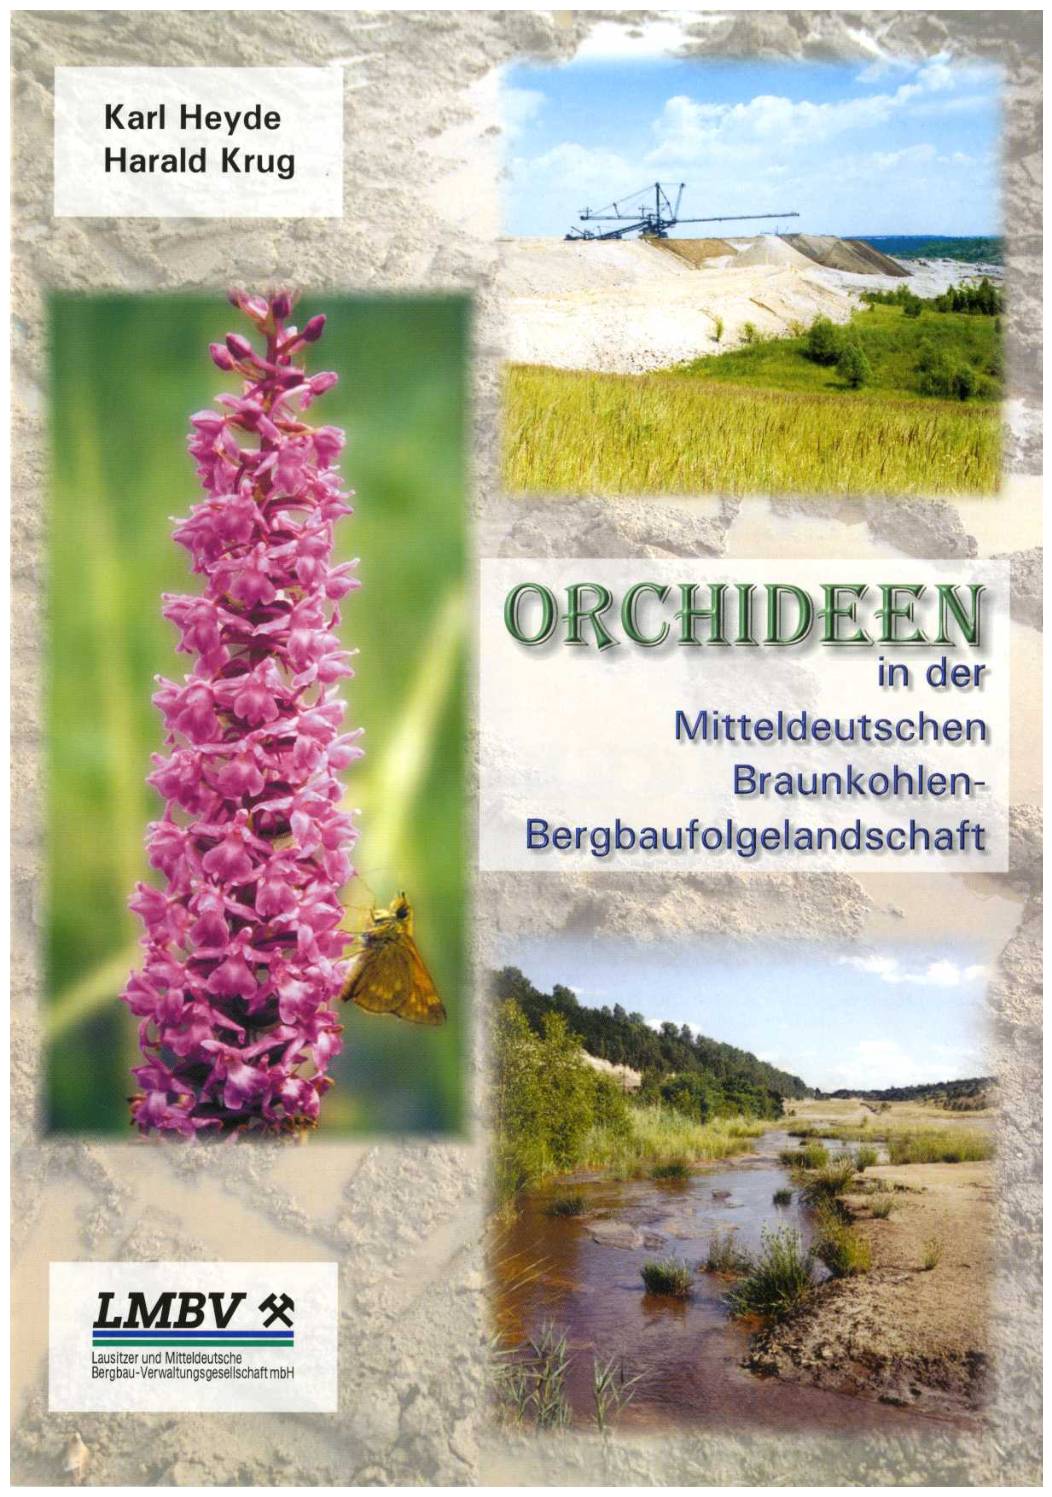 Orchideen MD Braunkohlen Bergbaufolgelandschaft 2000 pdf